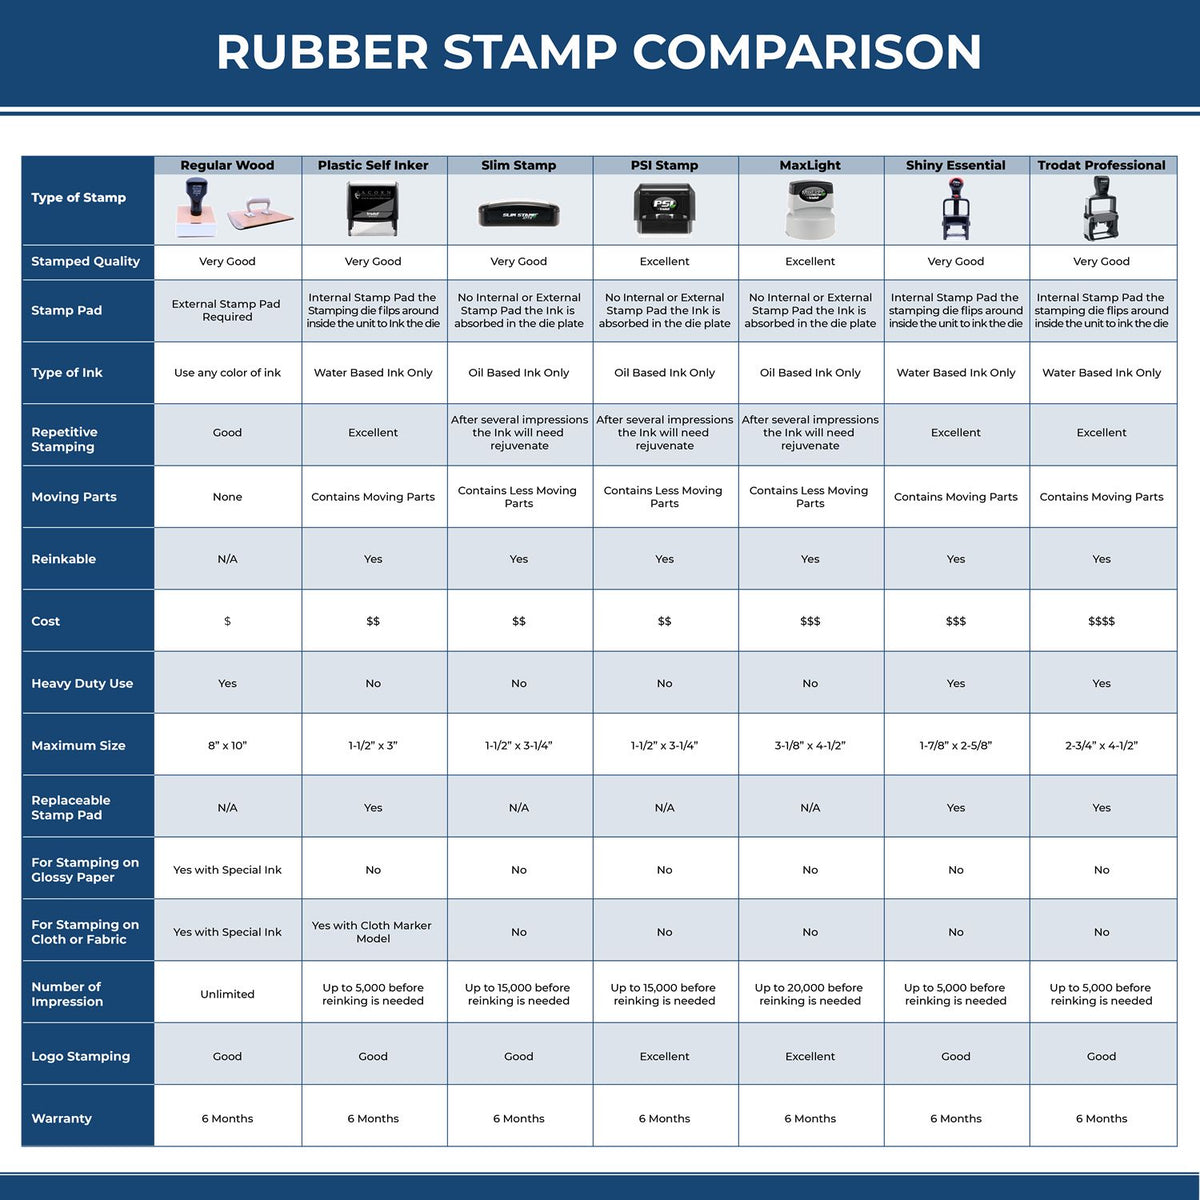 Large Forwarding Order Expiring Rubber Stamp 4927R Rubber Stamp Comparison